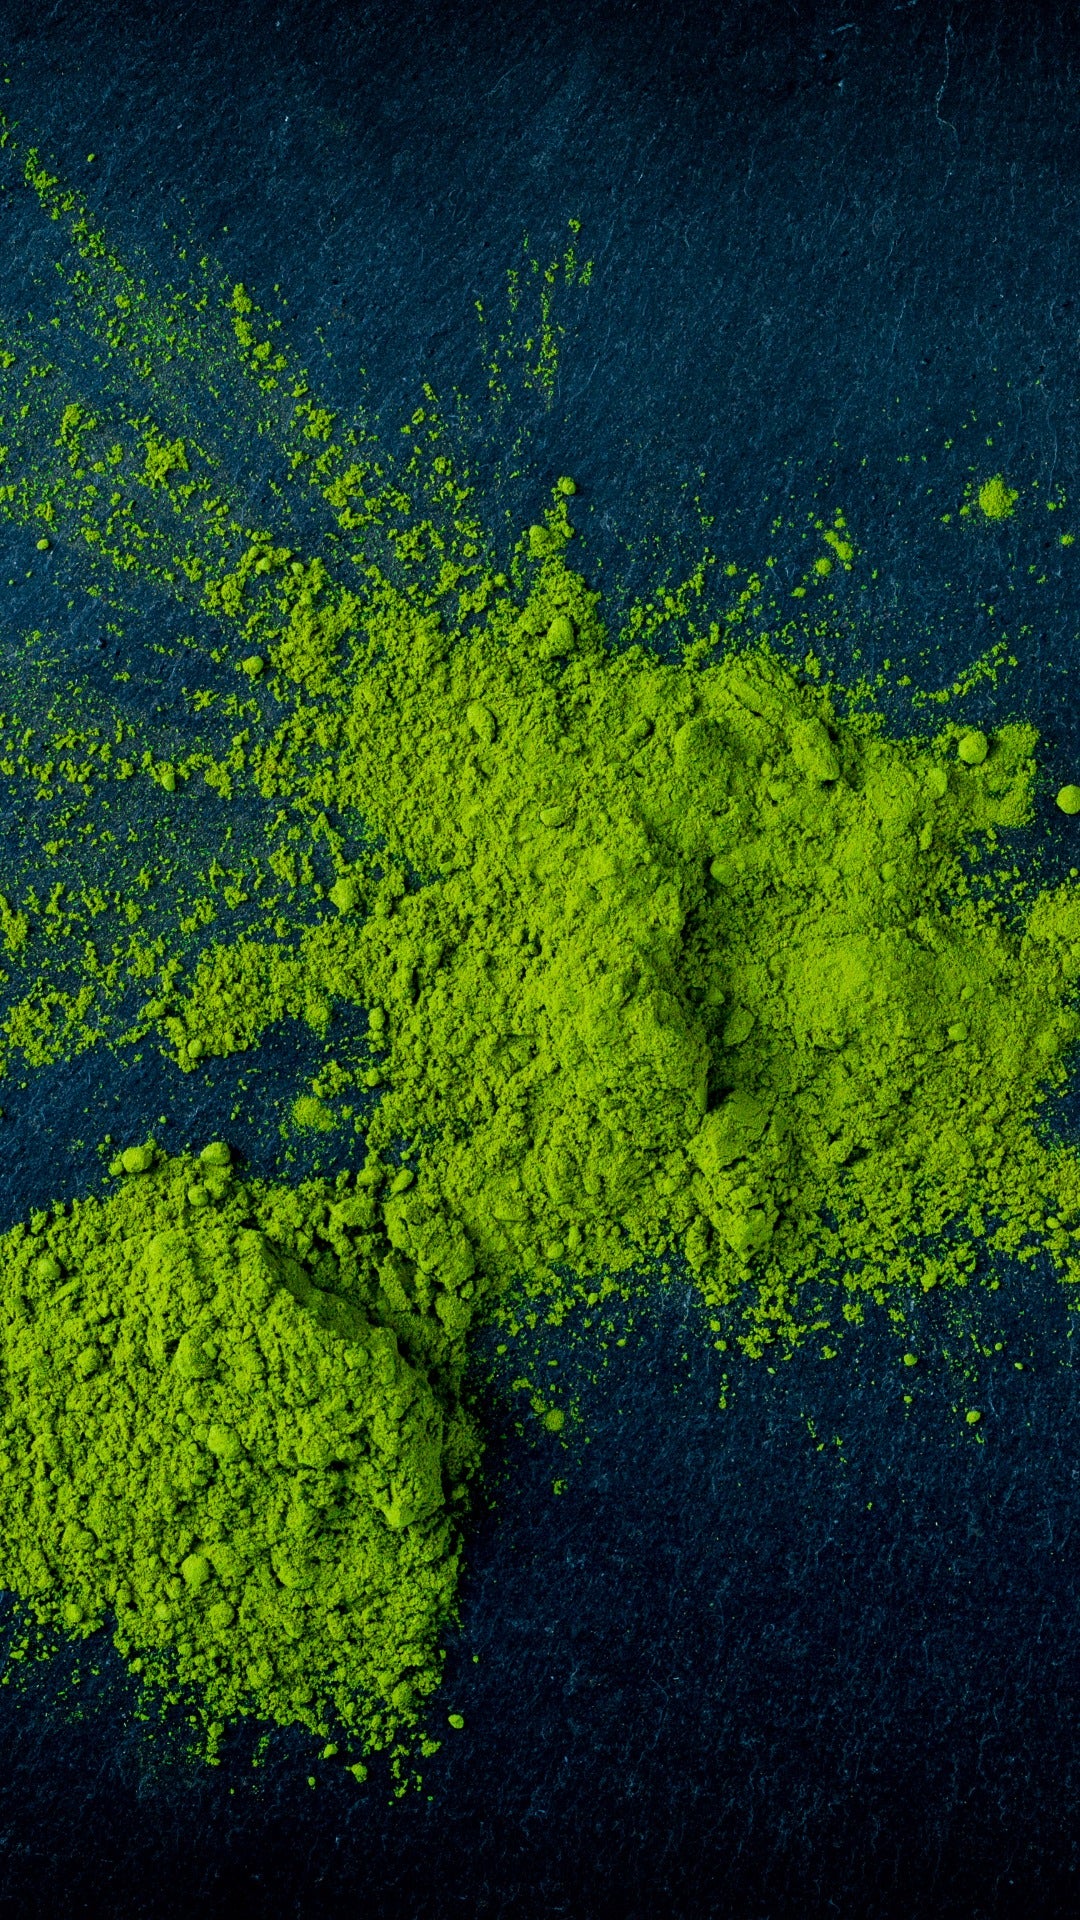 Matcha, green tea powder, high quality matcha powder, vibrant green, splashed, stone plate, dark background